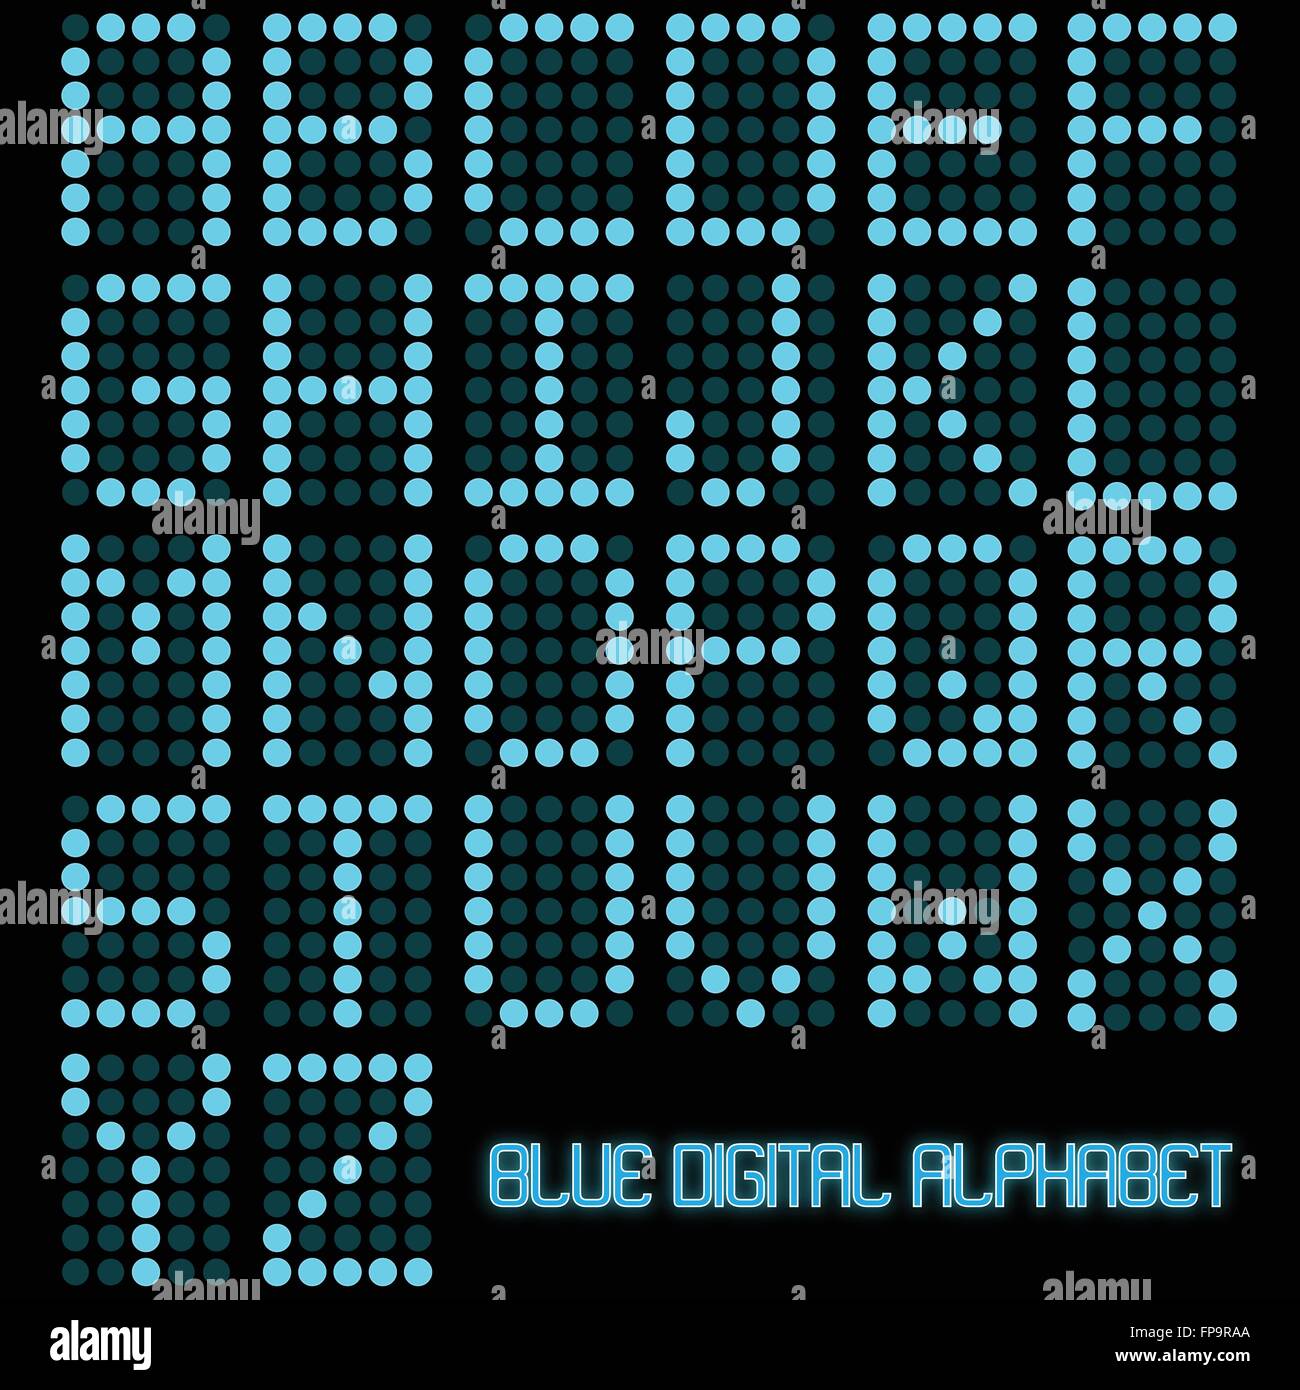 Image of a digital blue alphabet on a dark background. Stock Vector